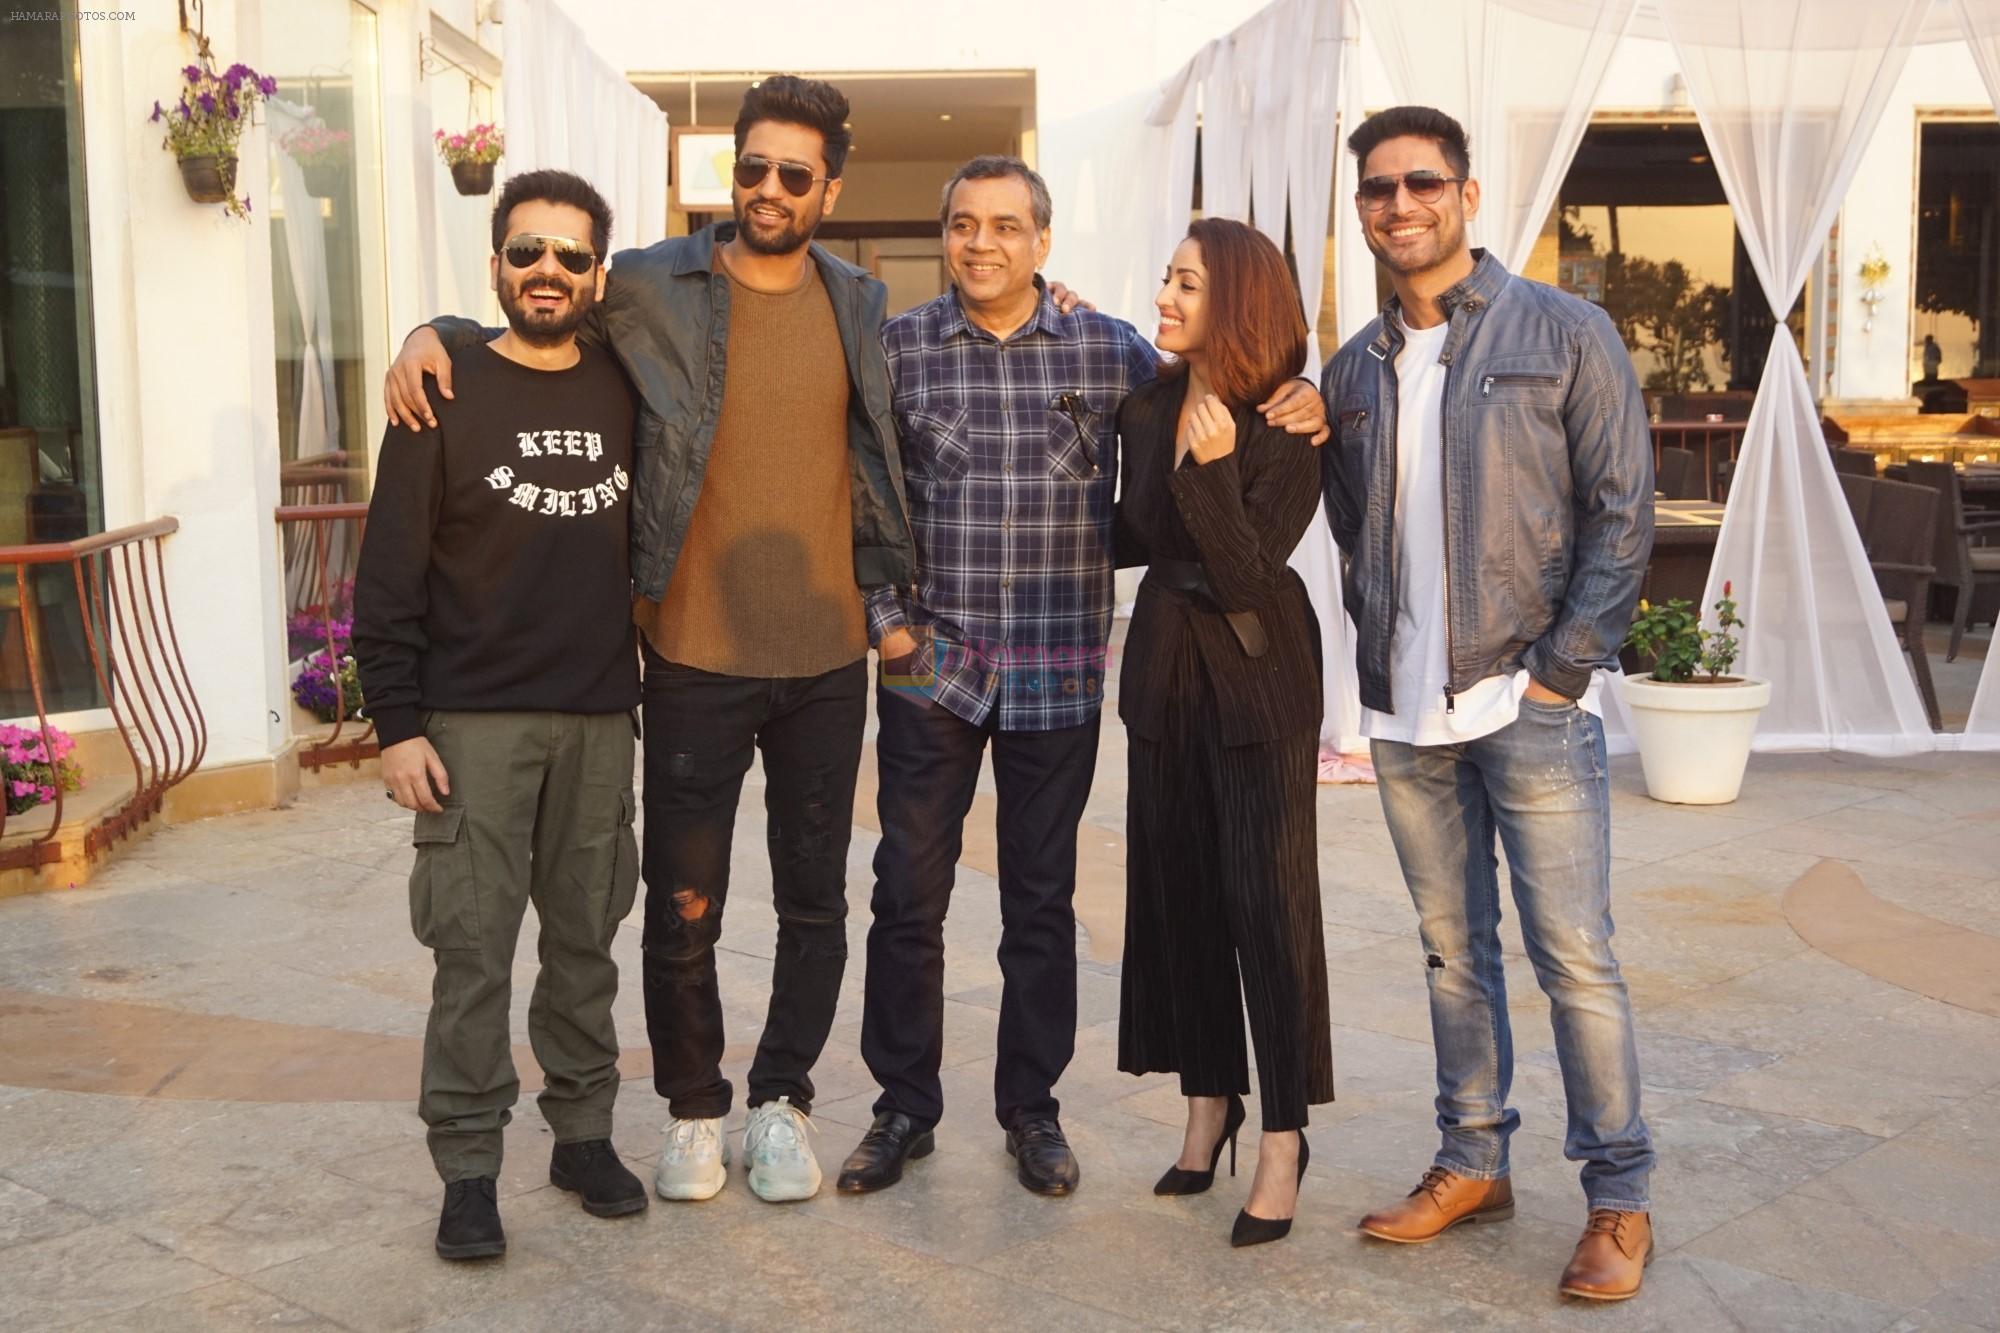 Vicky Kaushal,Paresh Rawal,Yami Gautam, Mohit Raina, Aditya Dhar Spotted for Media Interview of film URI on 7th Jan 2019